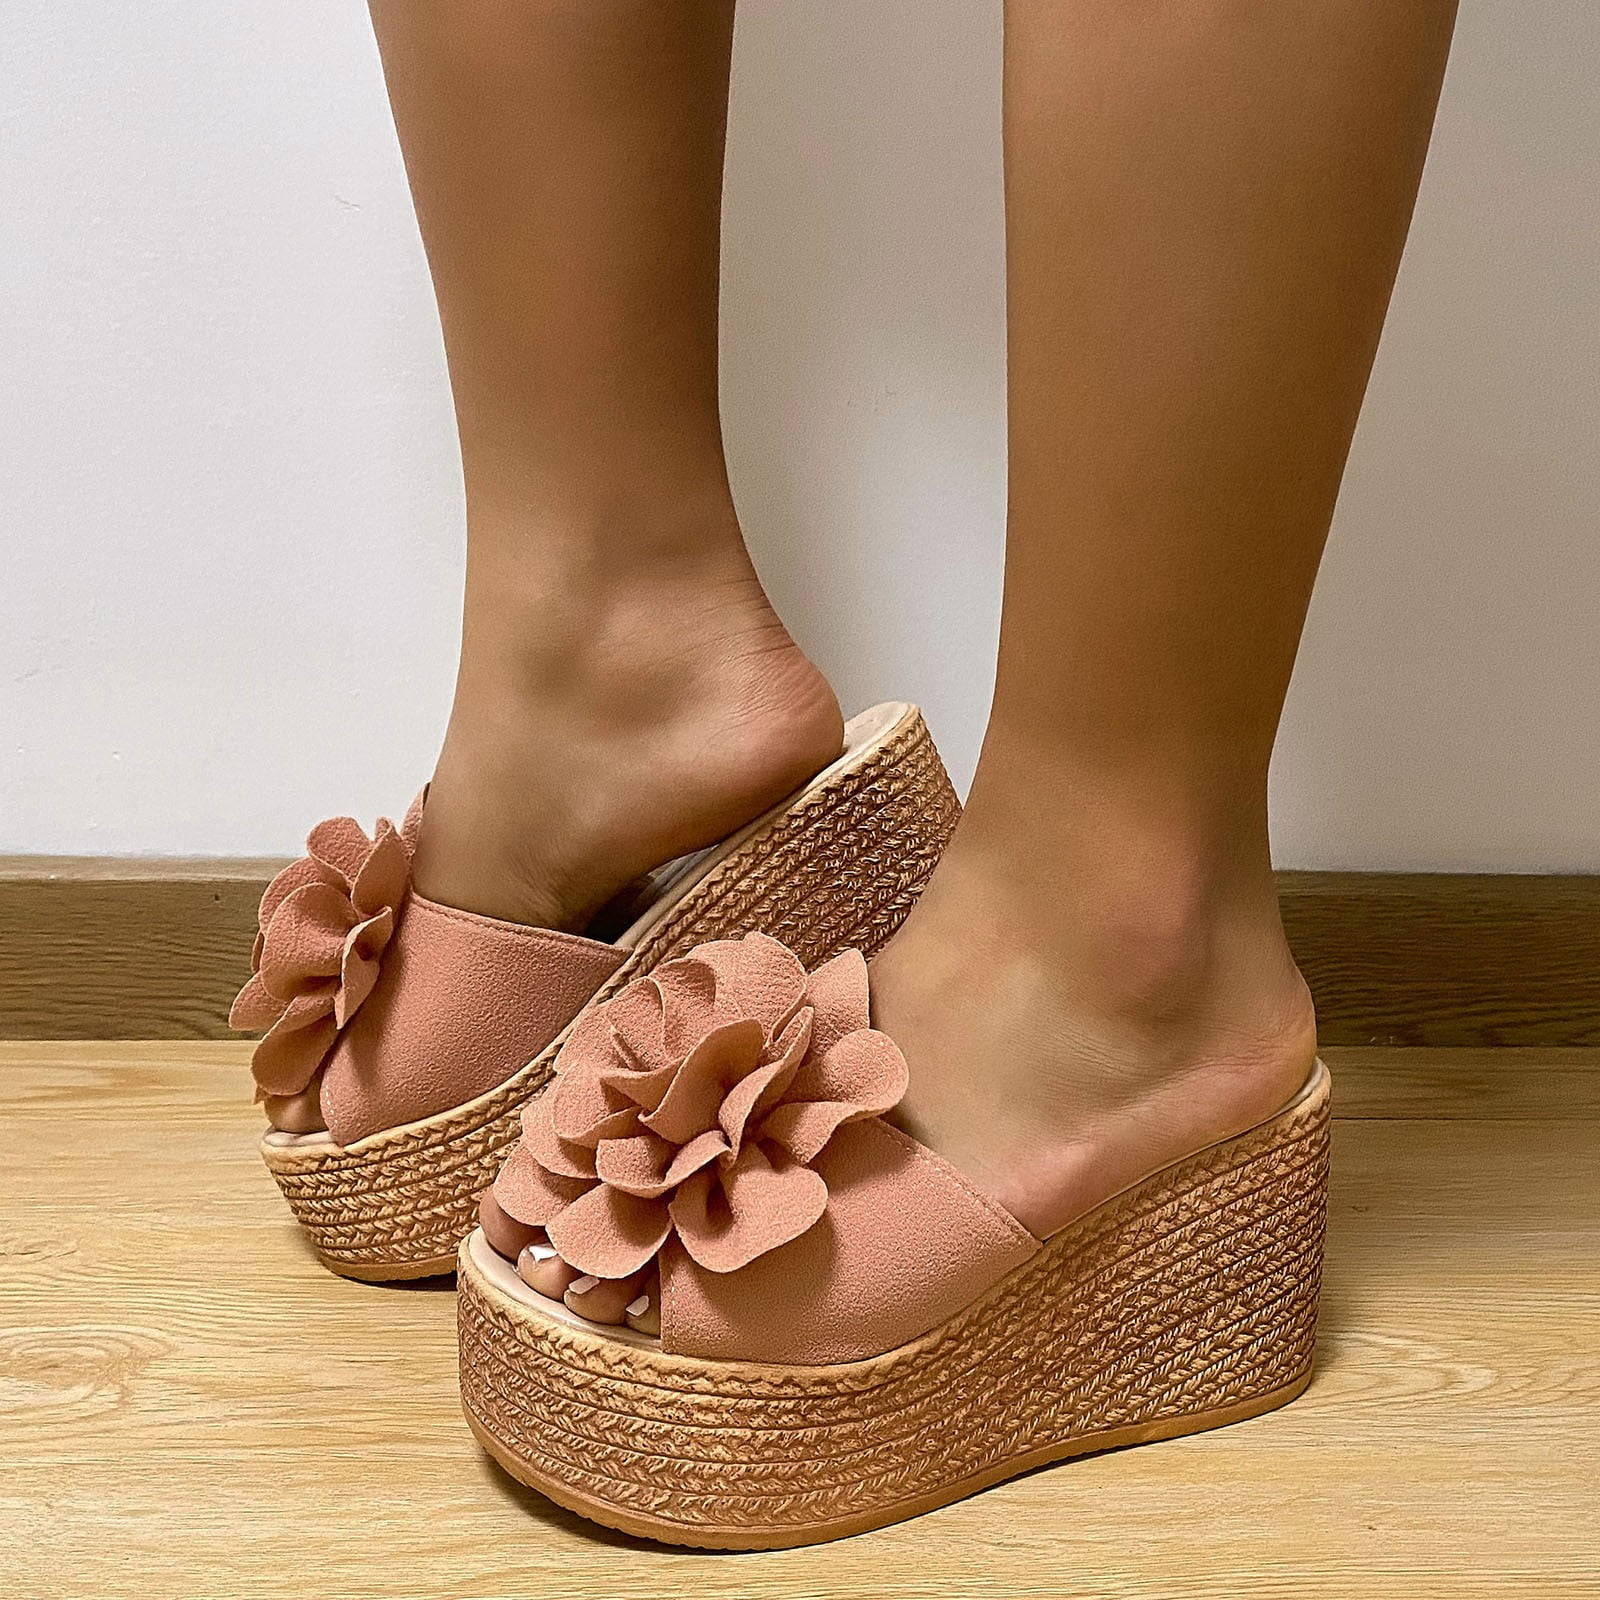 Women's sandals for sale in Vadodara, Gujarat, India | Facebook Marketplace  | Facebook